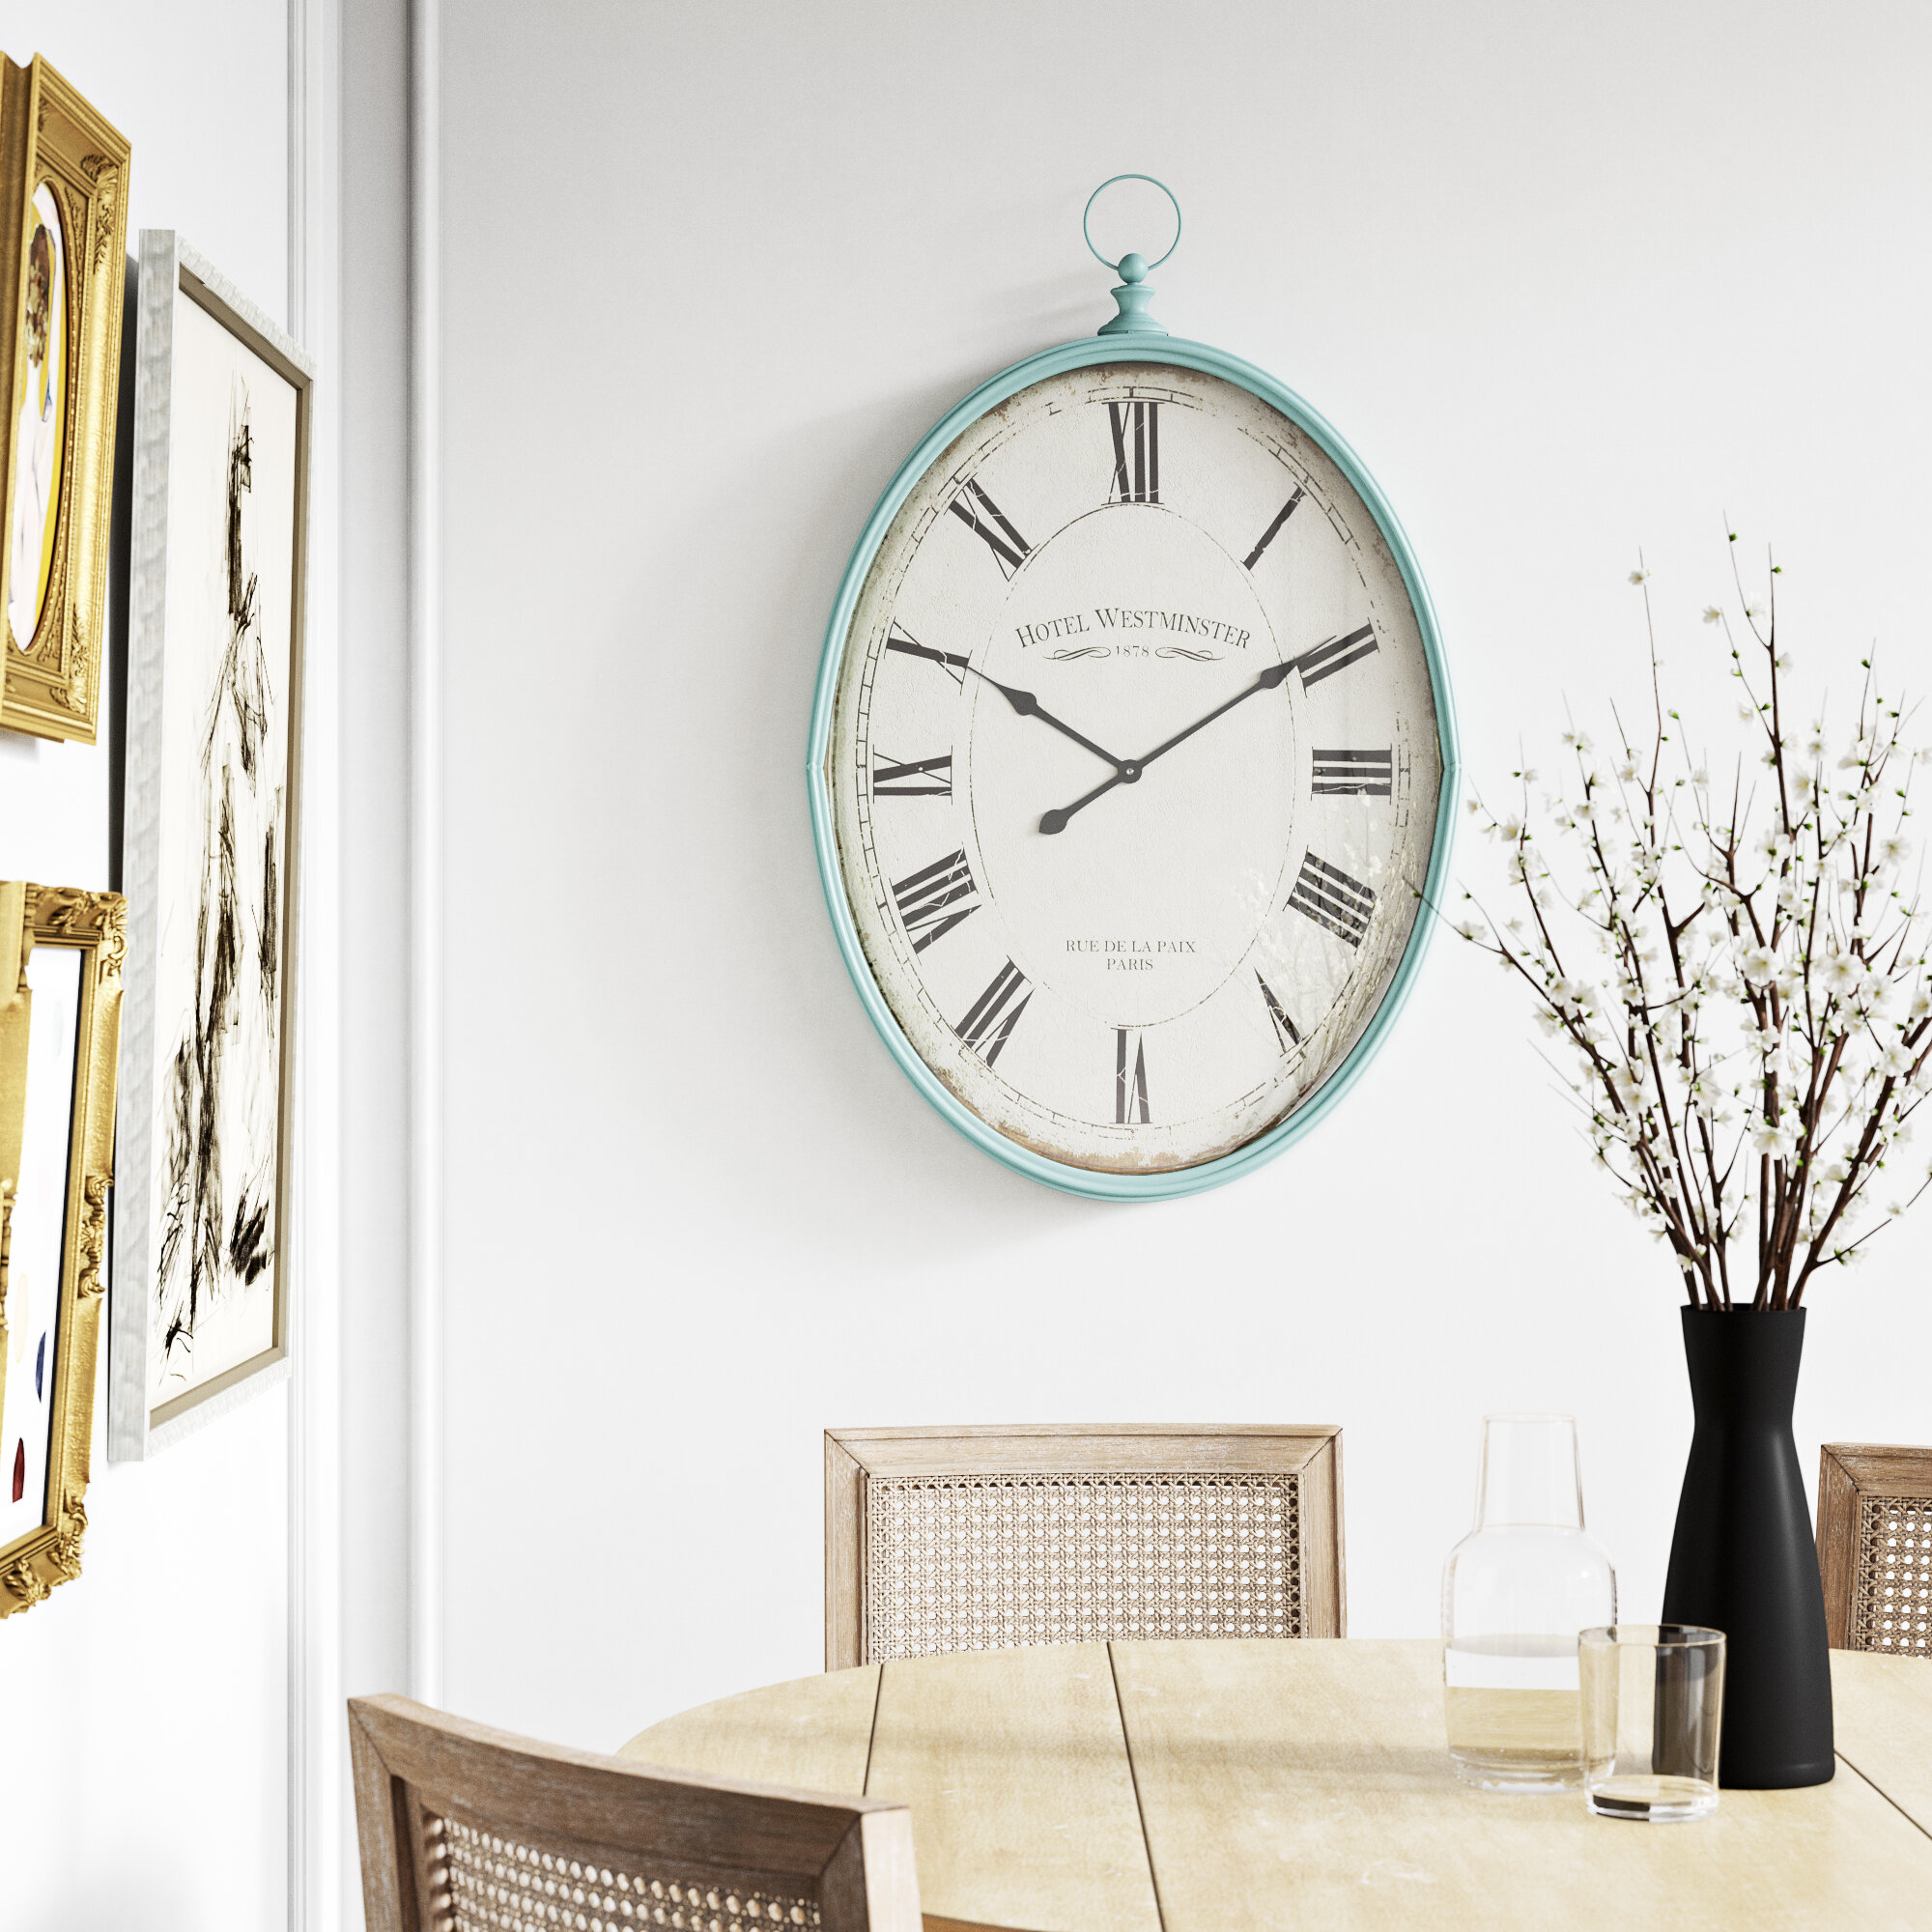 Details about   Decorative Clock Wall Clock Heavy Duty Home Decor Farmhouse Living Room